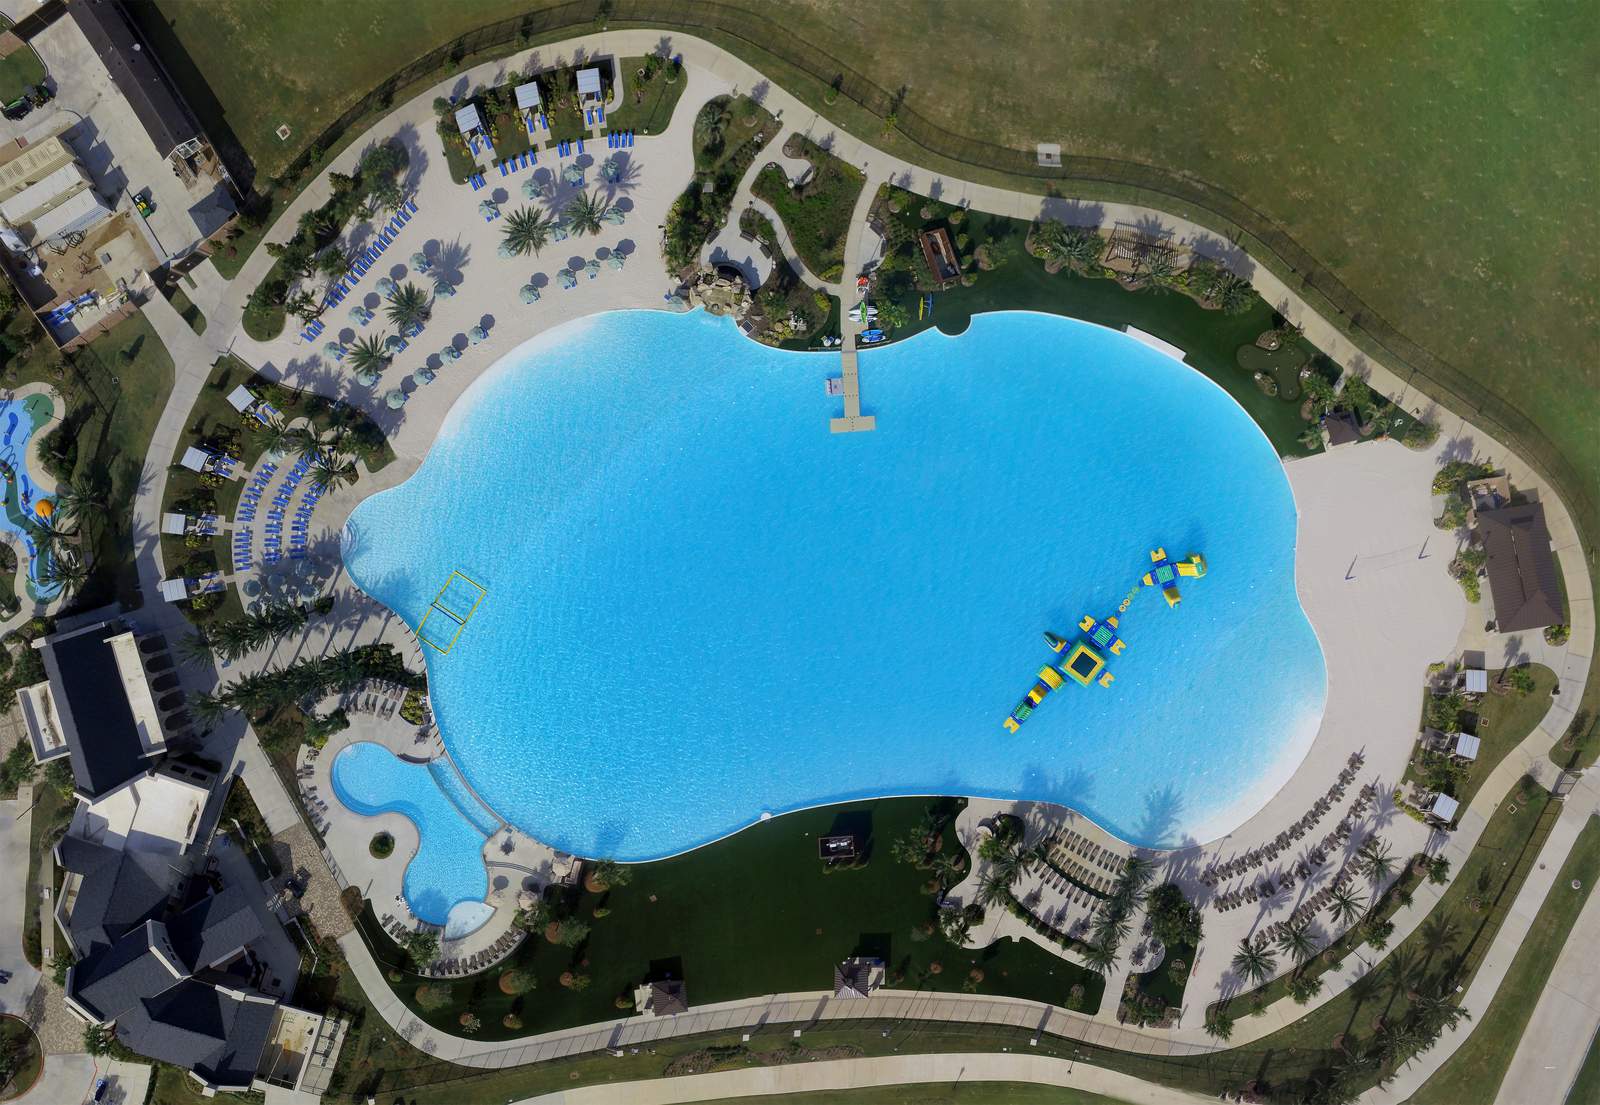 Rosharon will soon have a new crystal-clear lagoon